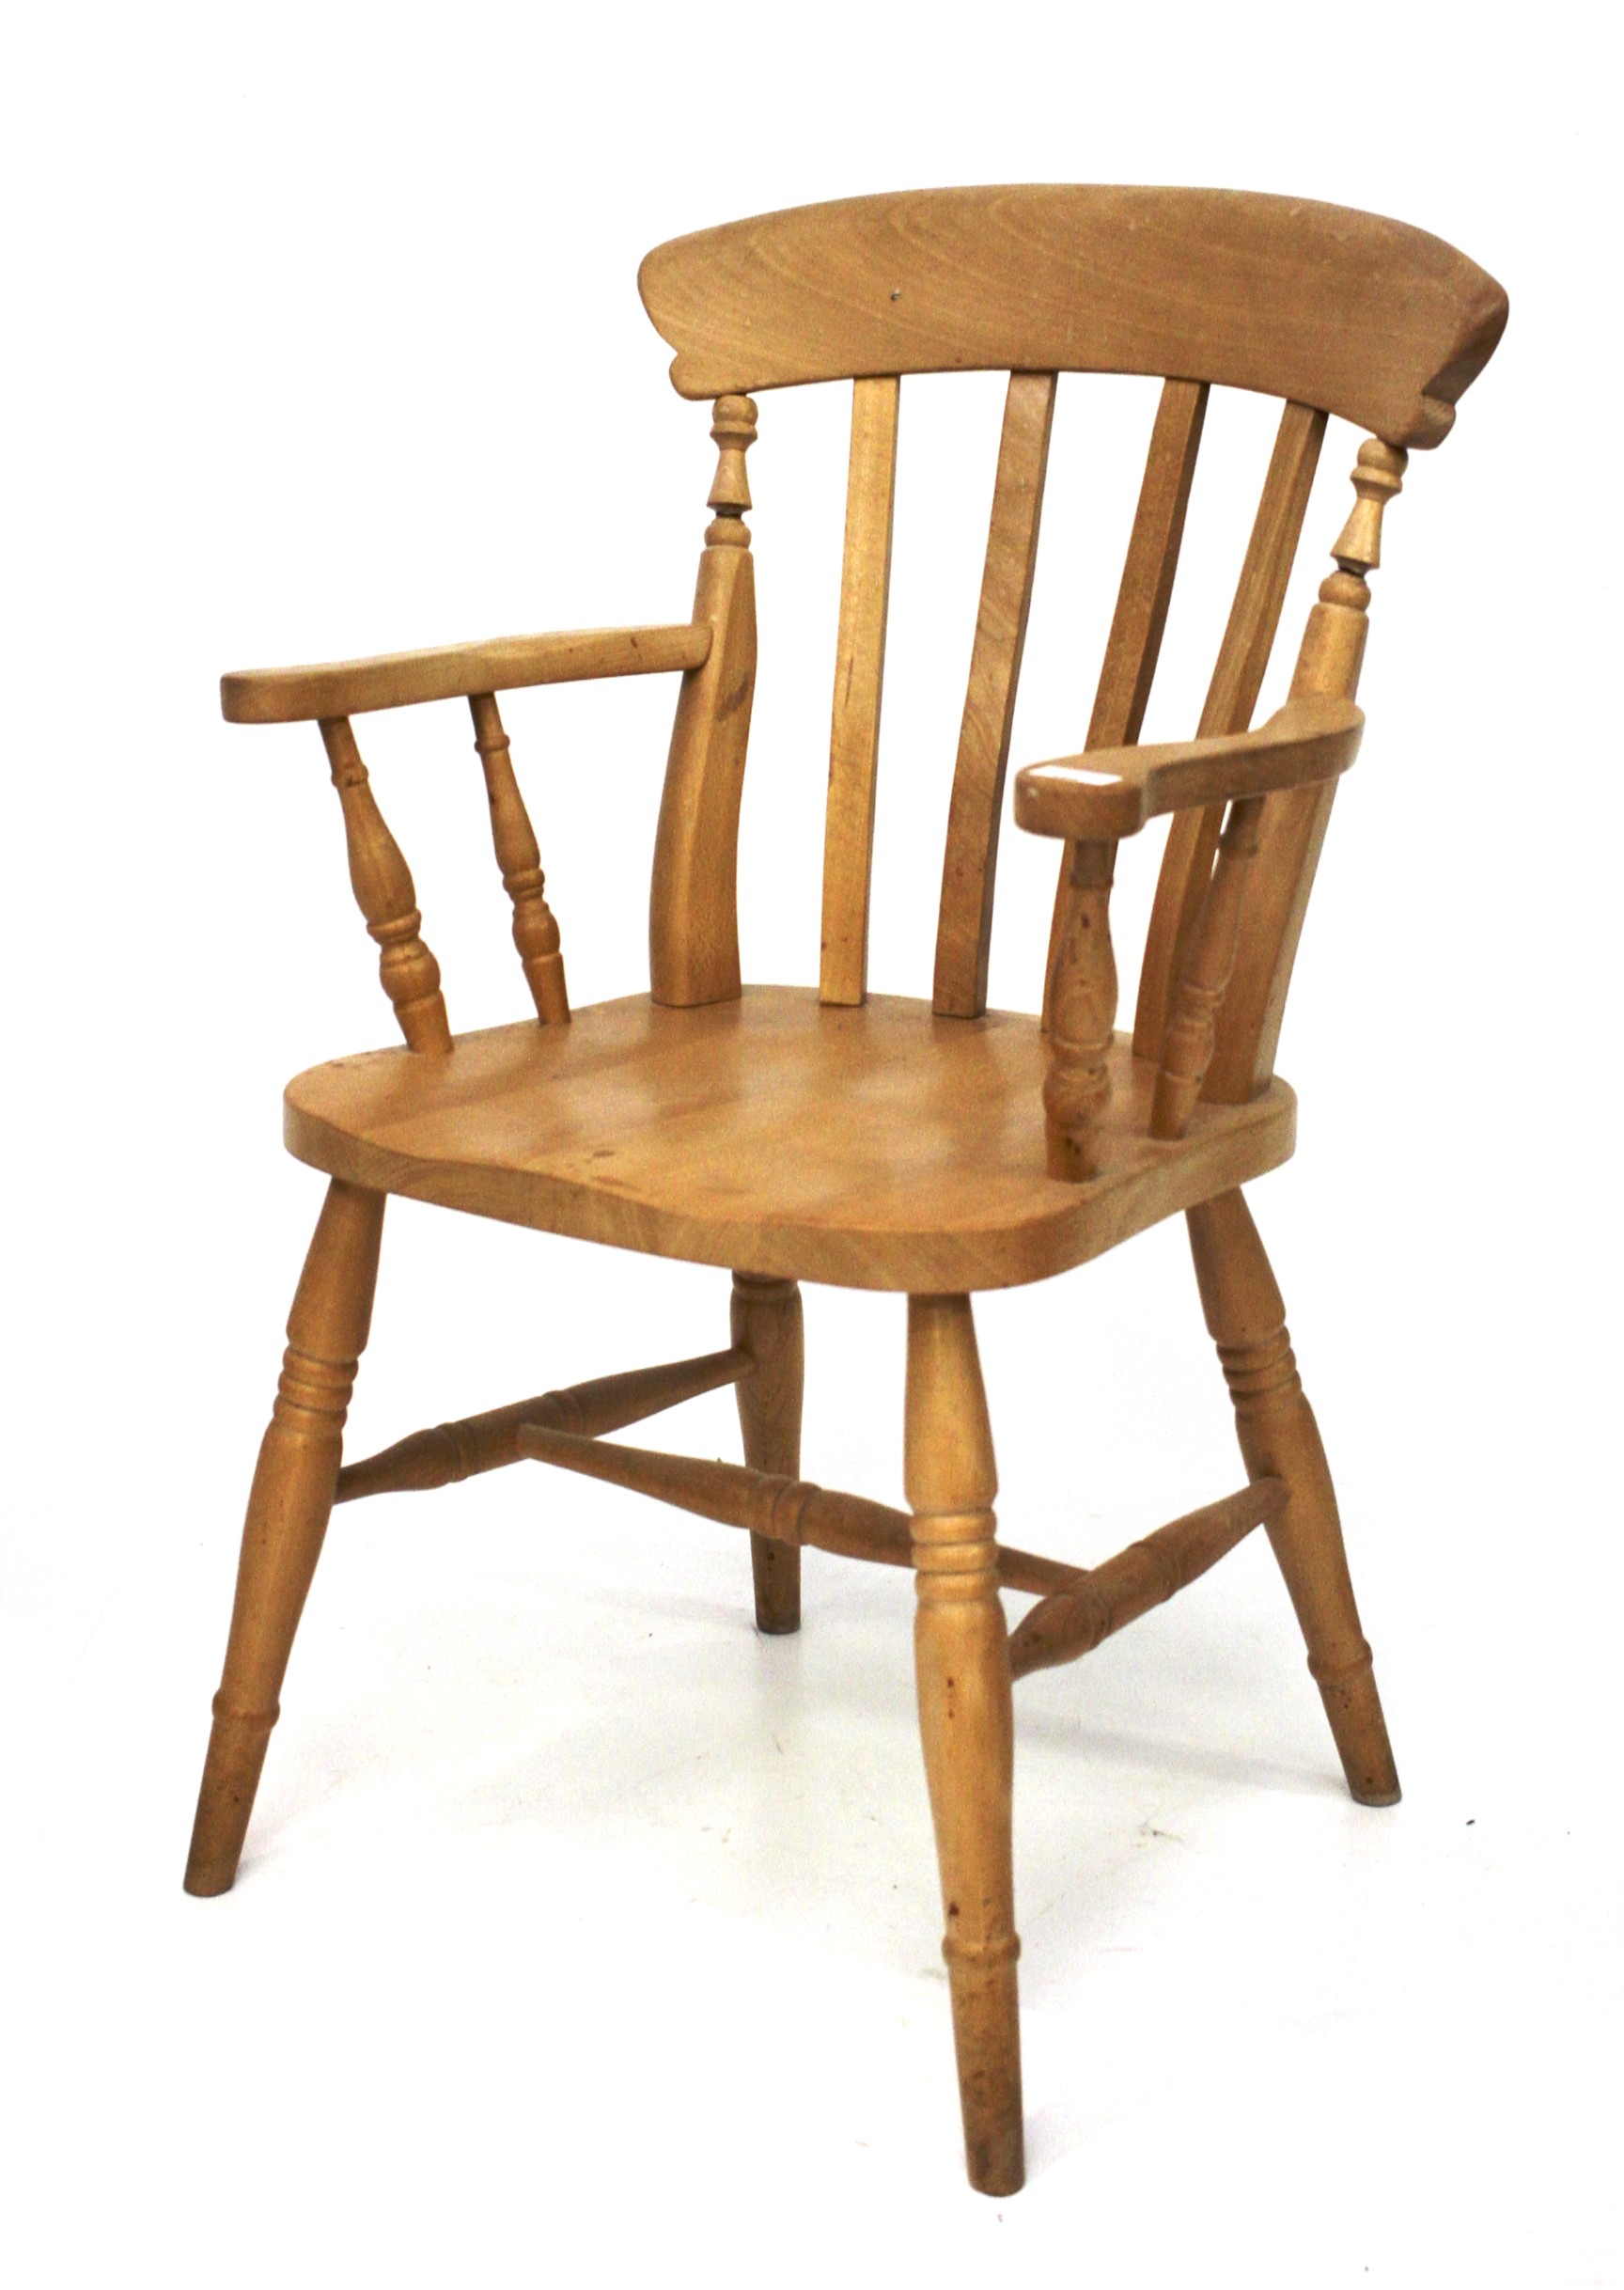 A pine carver chair.